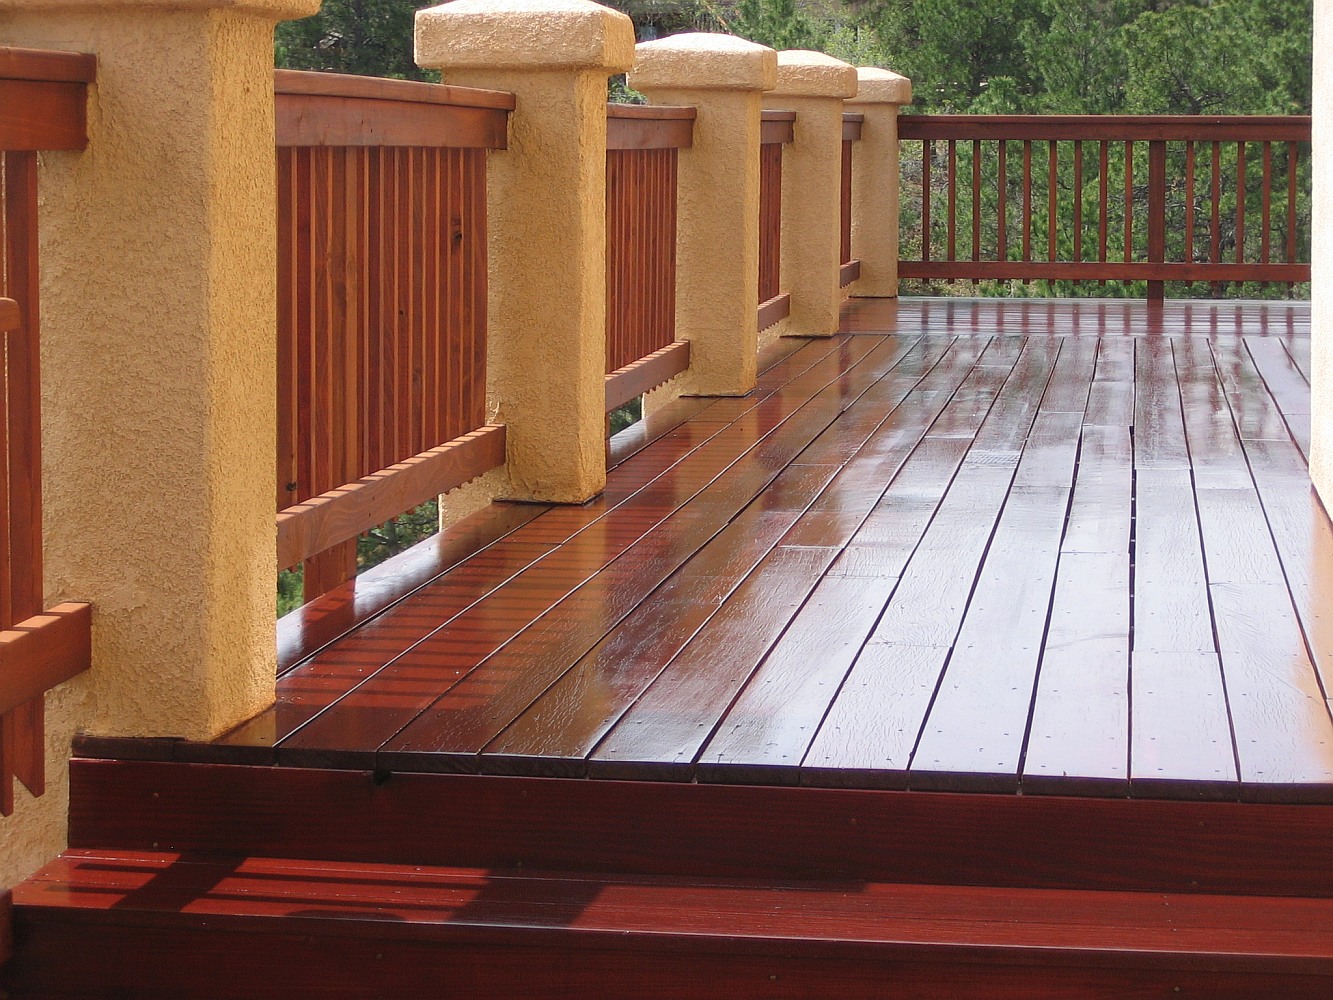 Cumaru hardwood deck with stucco columns and redwood snow fence railing